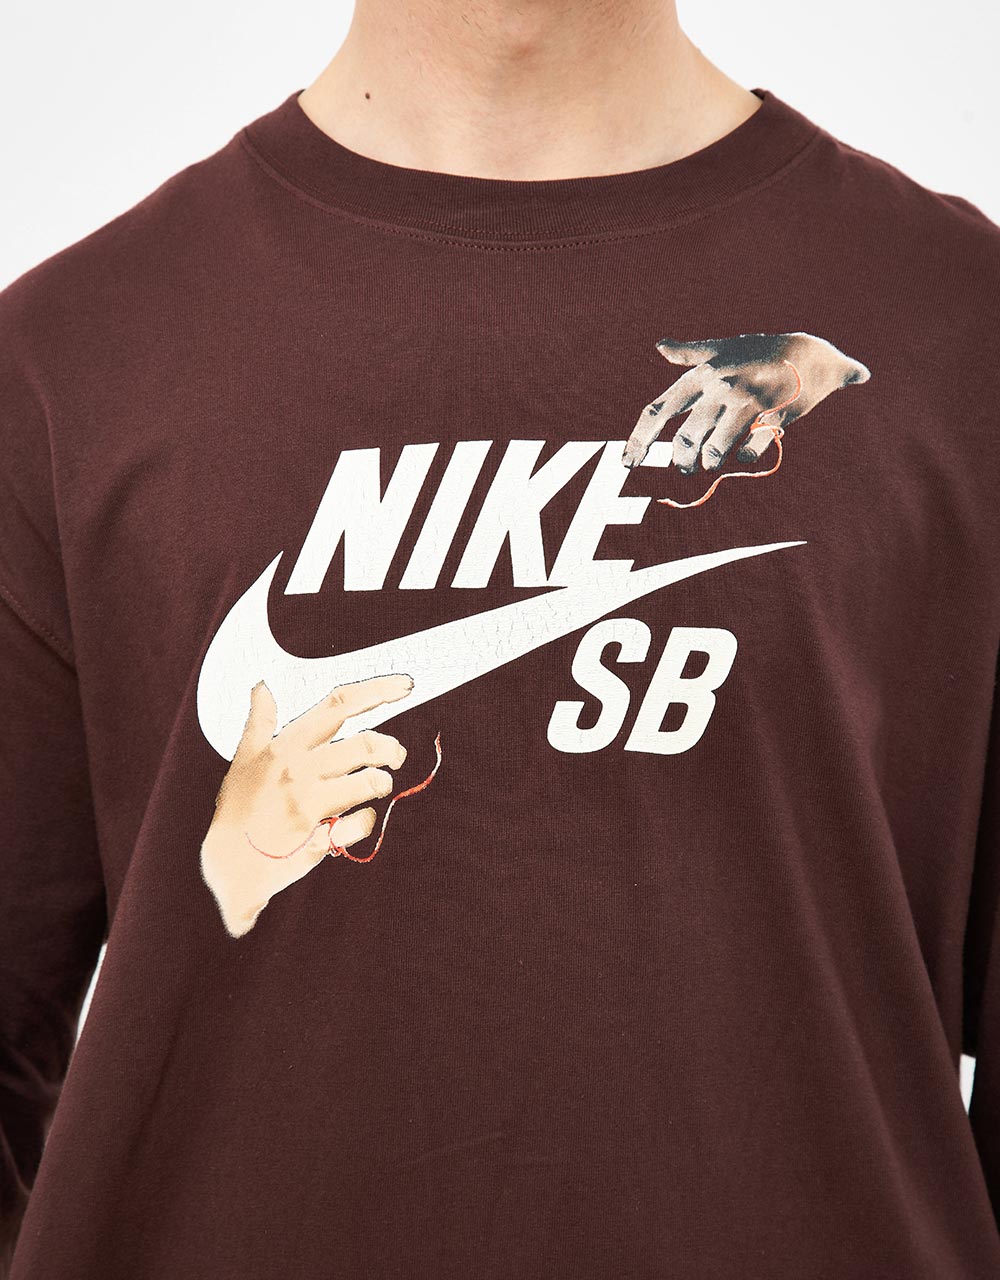 Nike SB City Of Love L/S T-Shirt - Earth